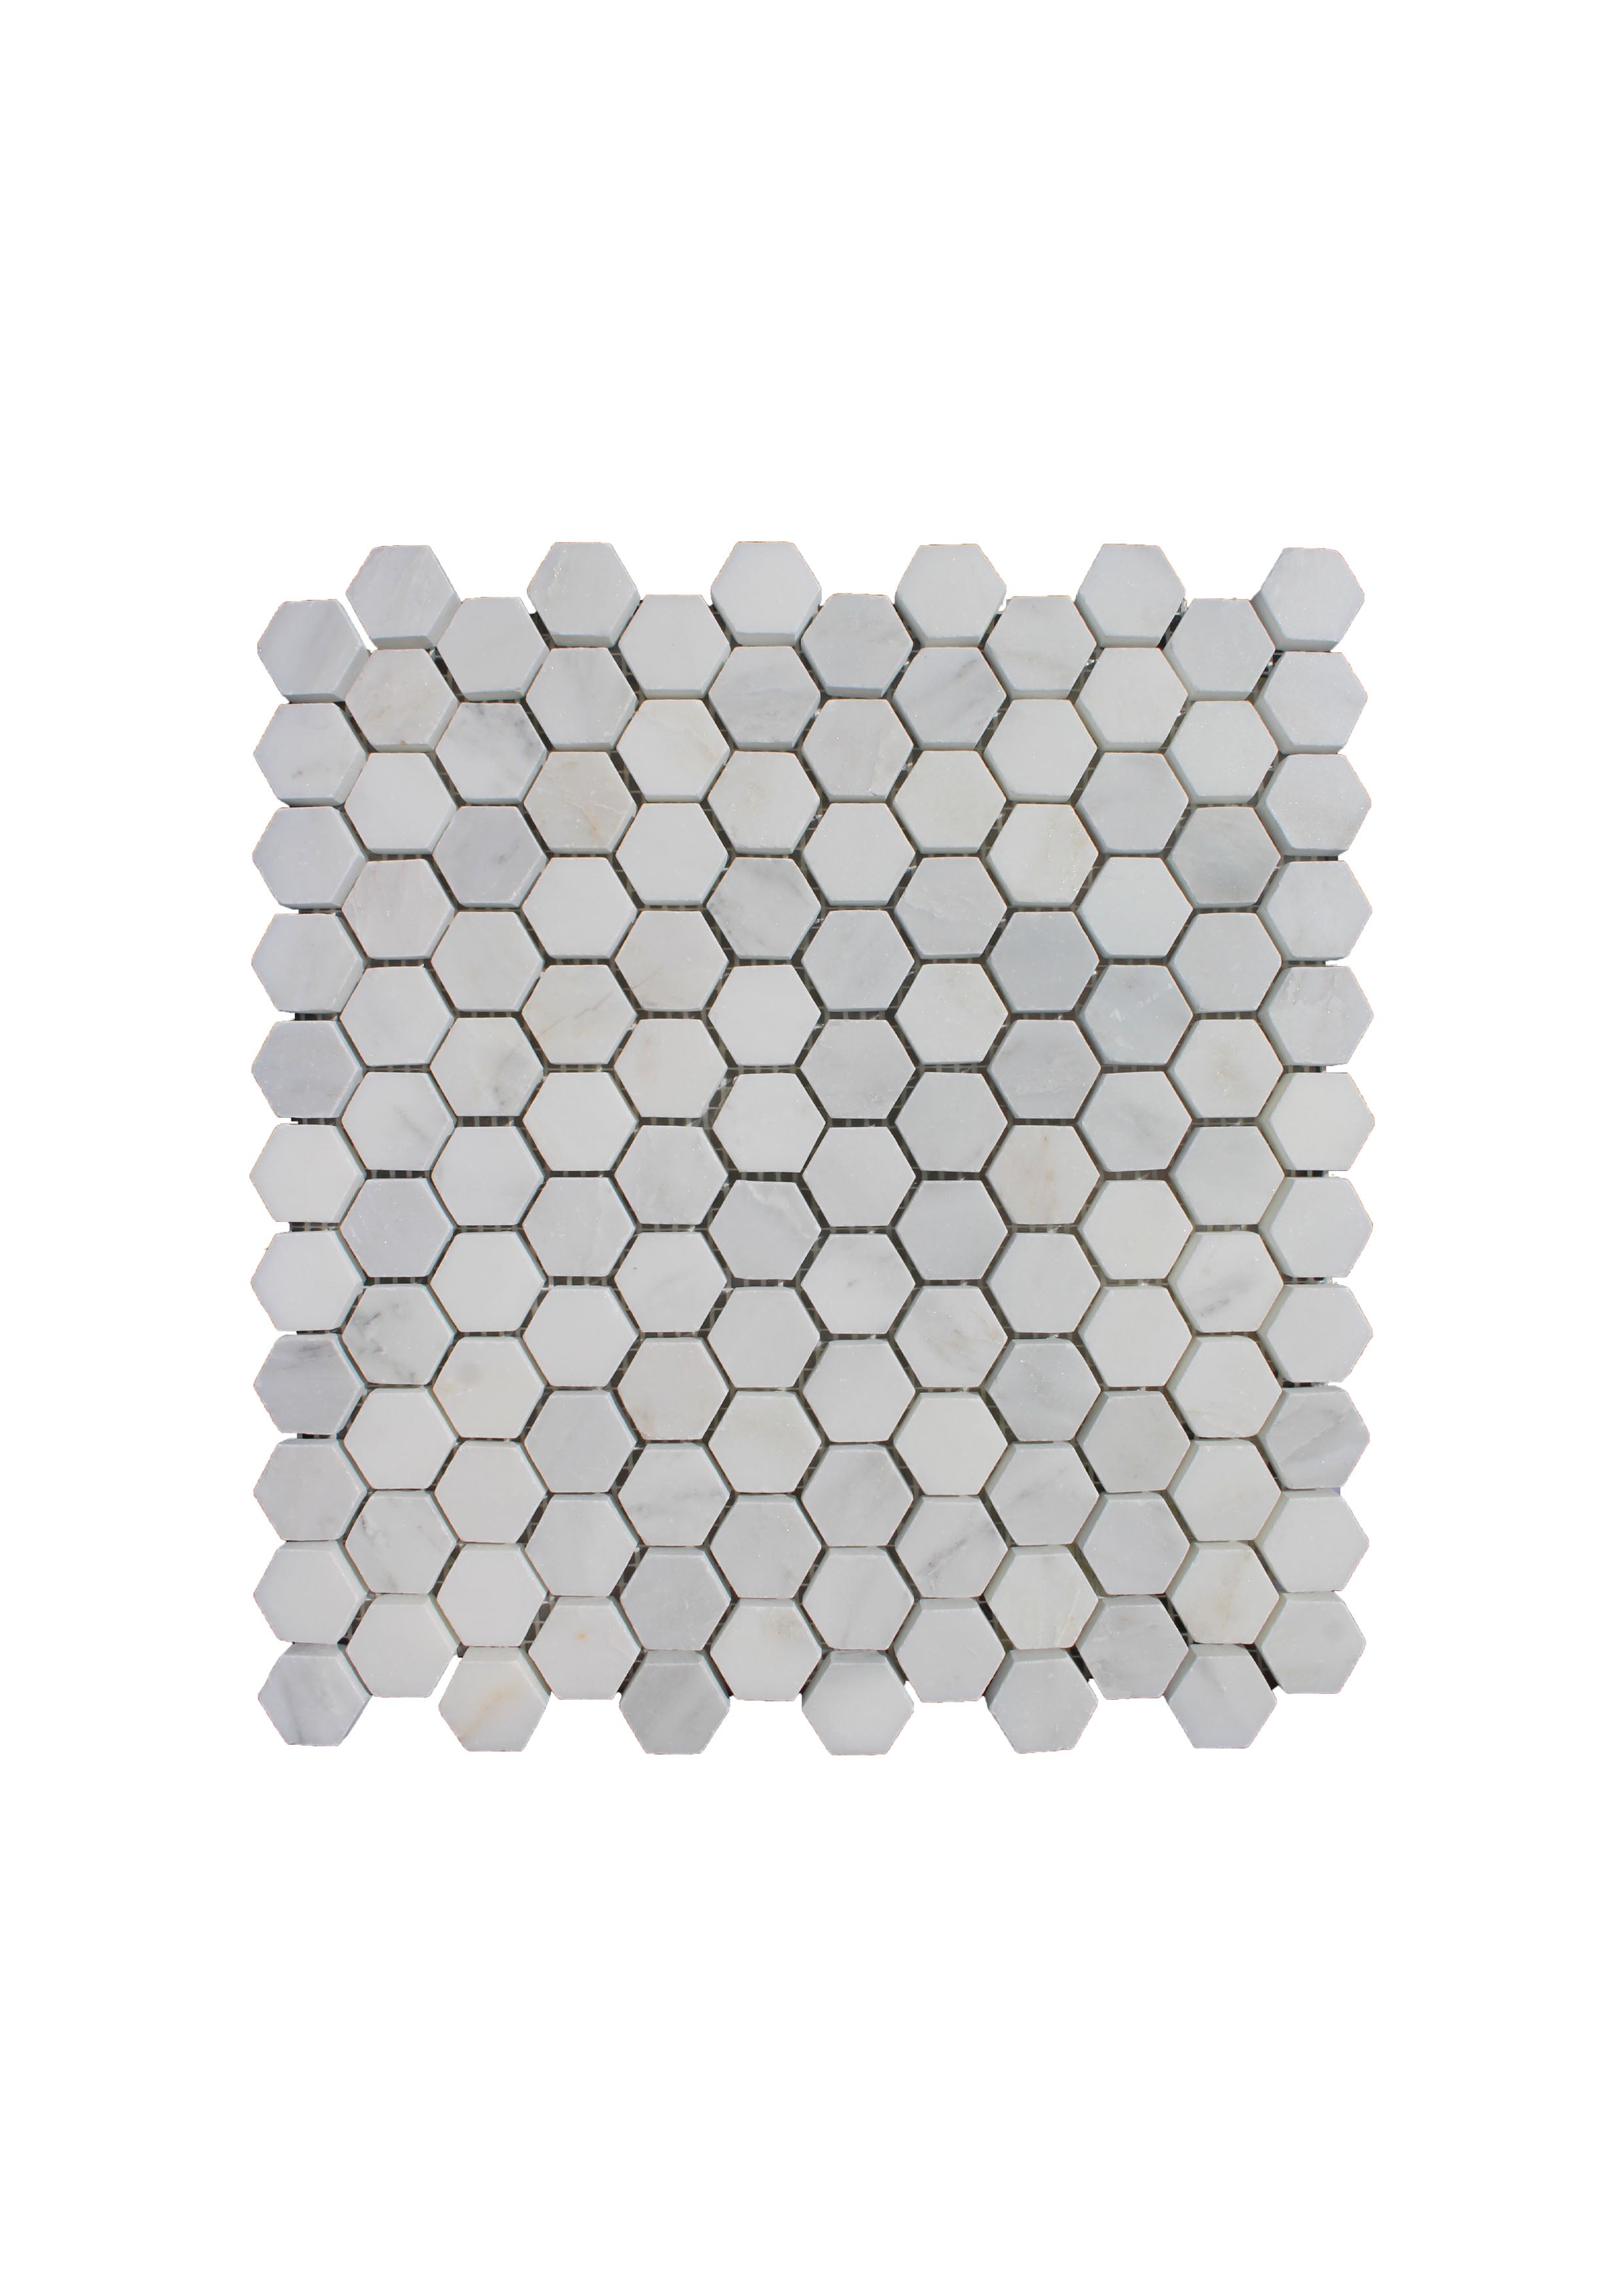 Little Tile Company Plaka White Marble Small Hexagon Mosaic Tiles